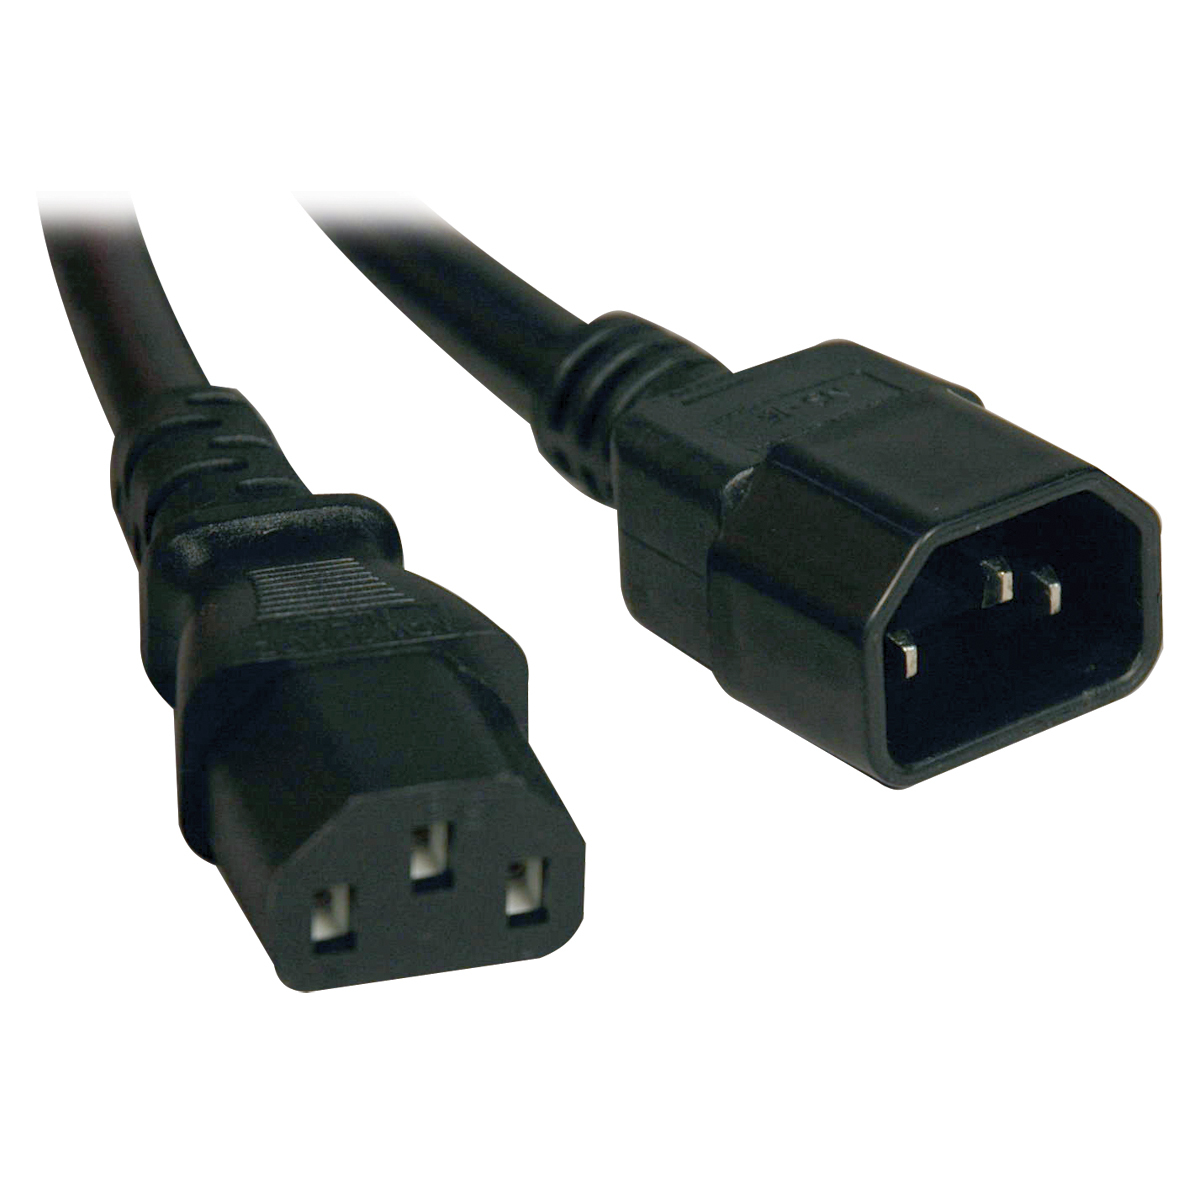 Cable De Poder Para Pc Tripp Lite C14 Macho C13 Hembra 91Cm P004-003